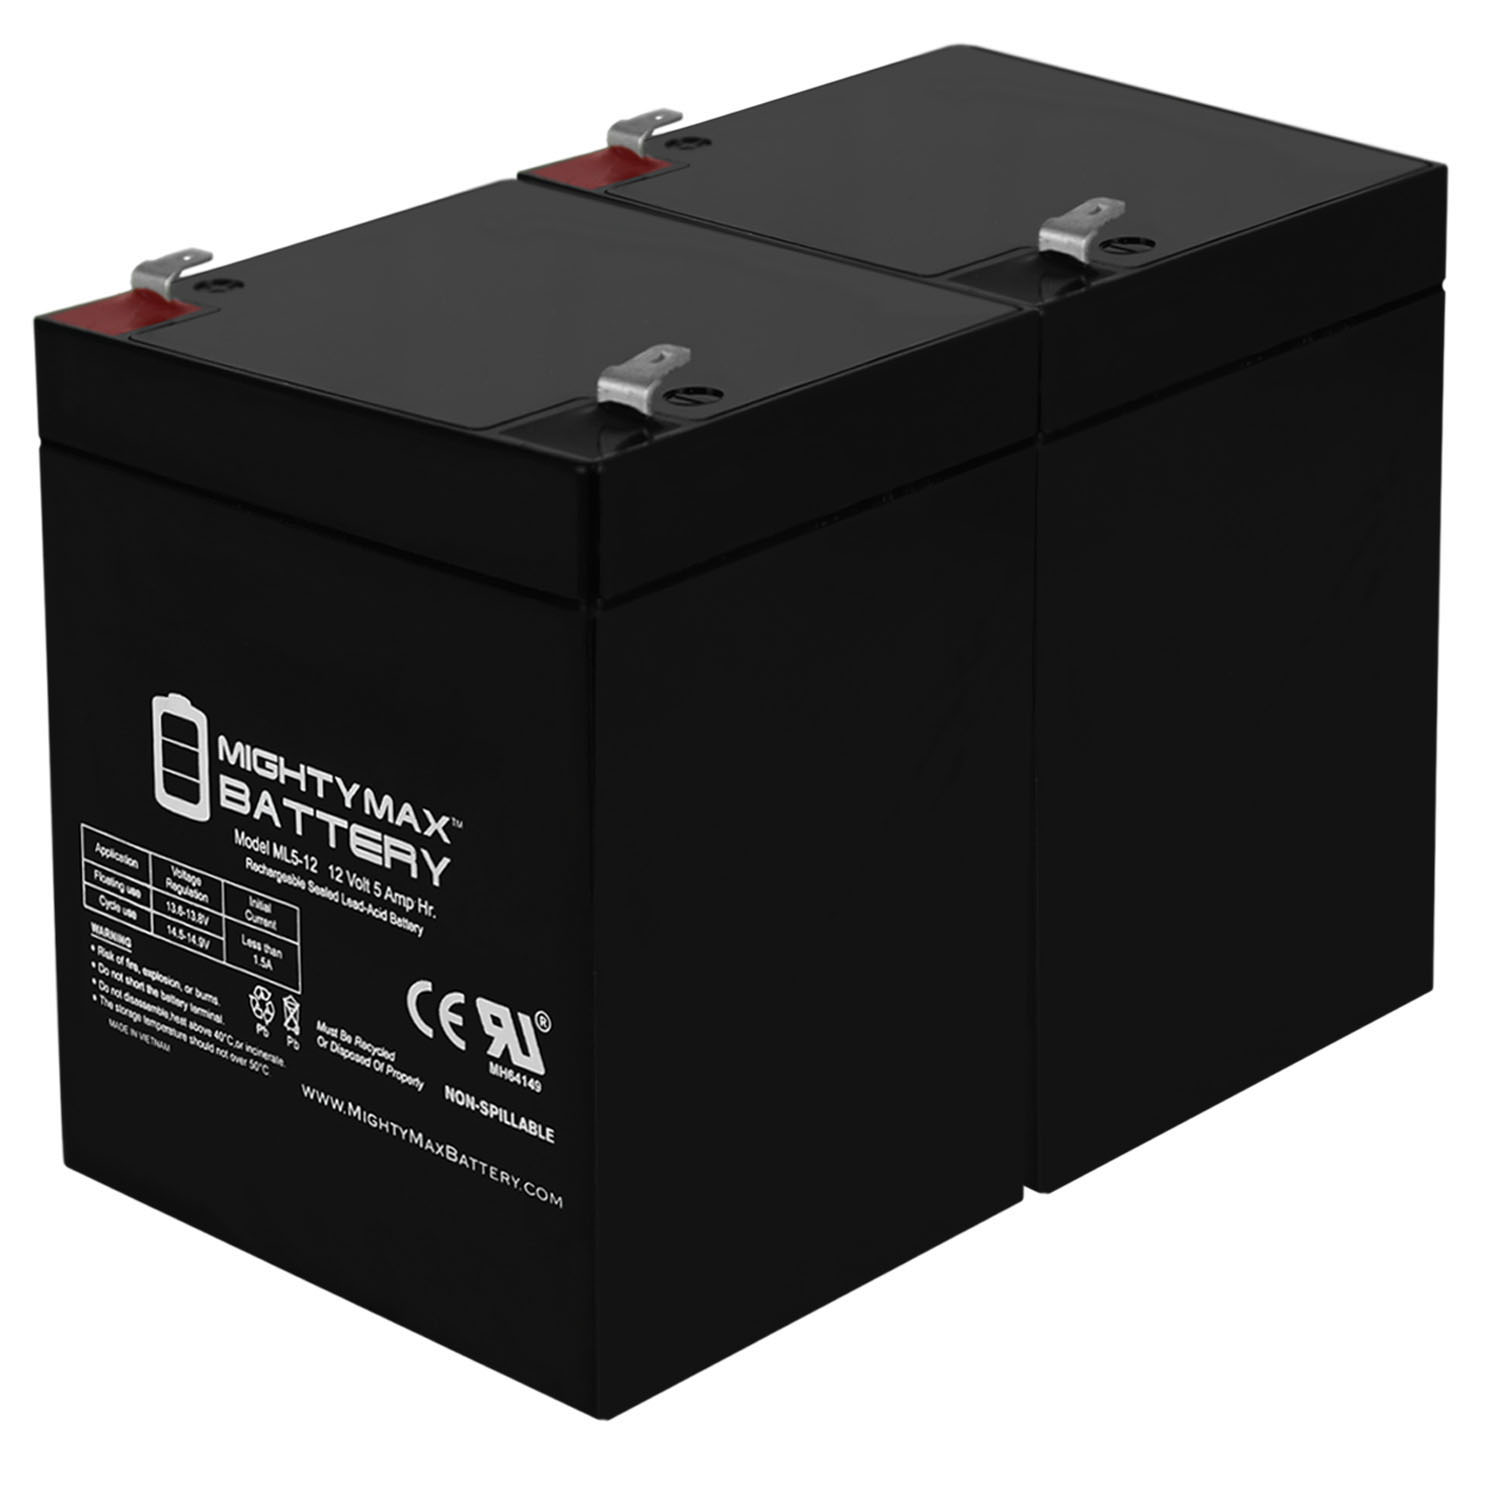 12V 5AH SLA Replacement Battery for Razor E175 Red 13111259 - 2 Pack